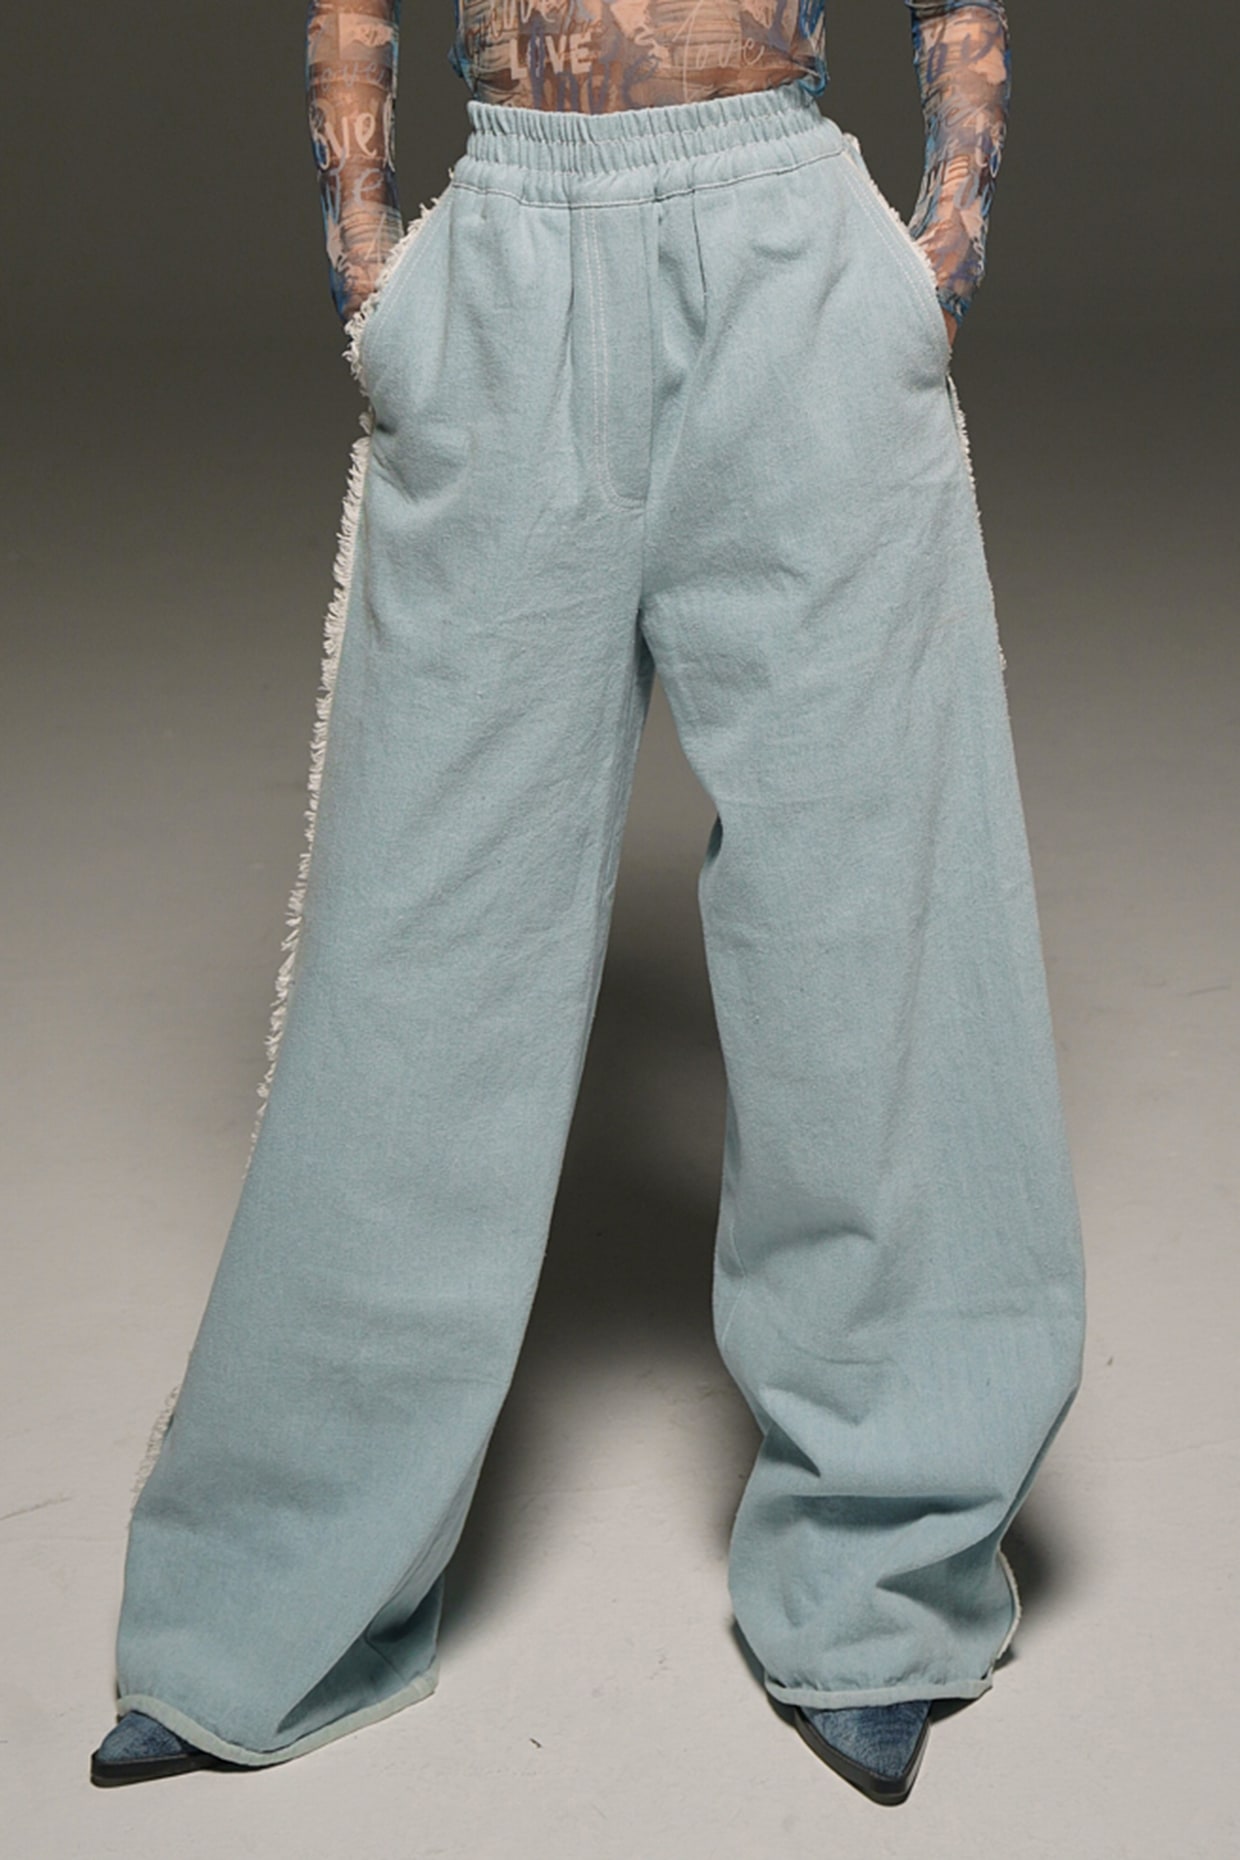 Denim Diva Pants Suit – Shy vs Bold